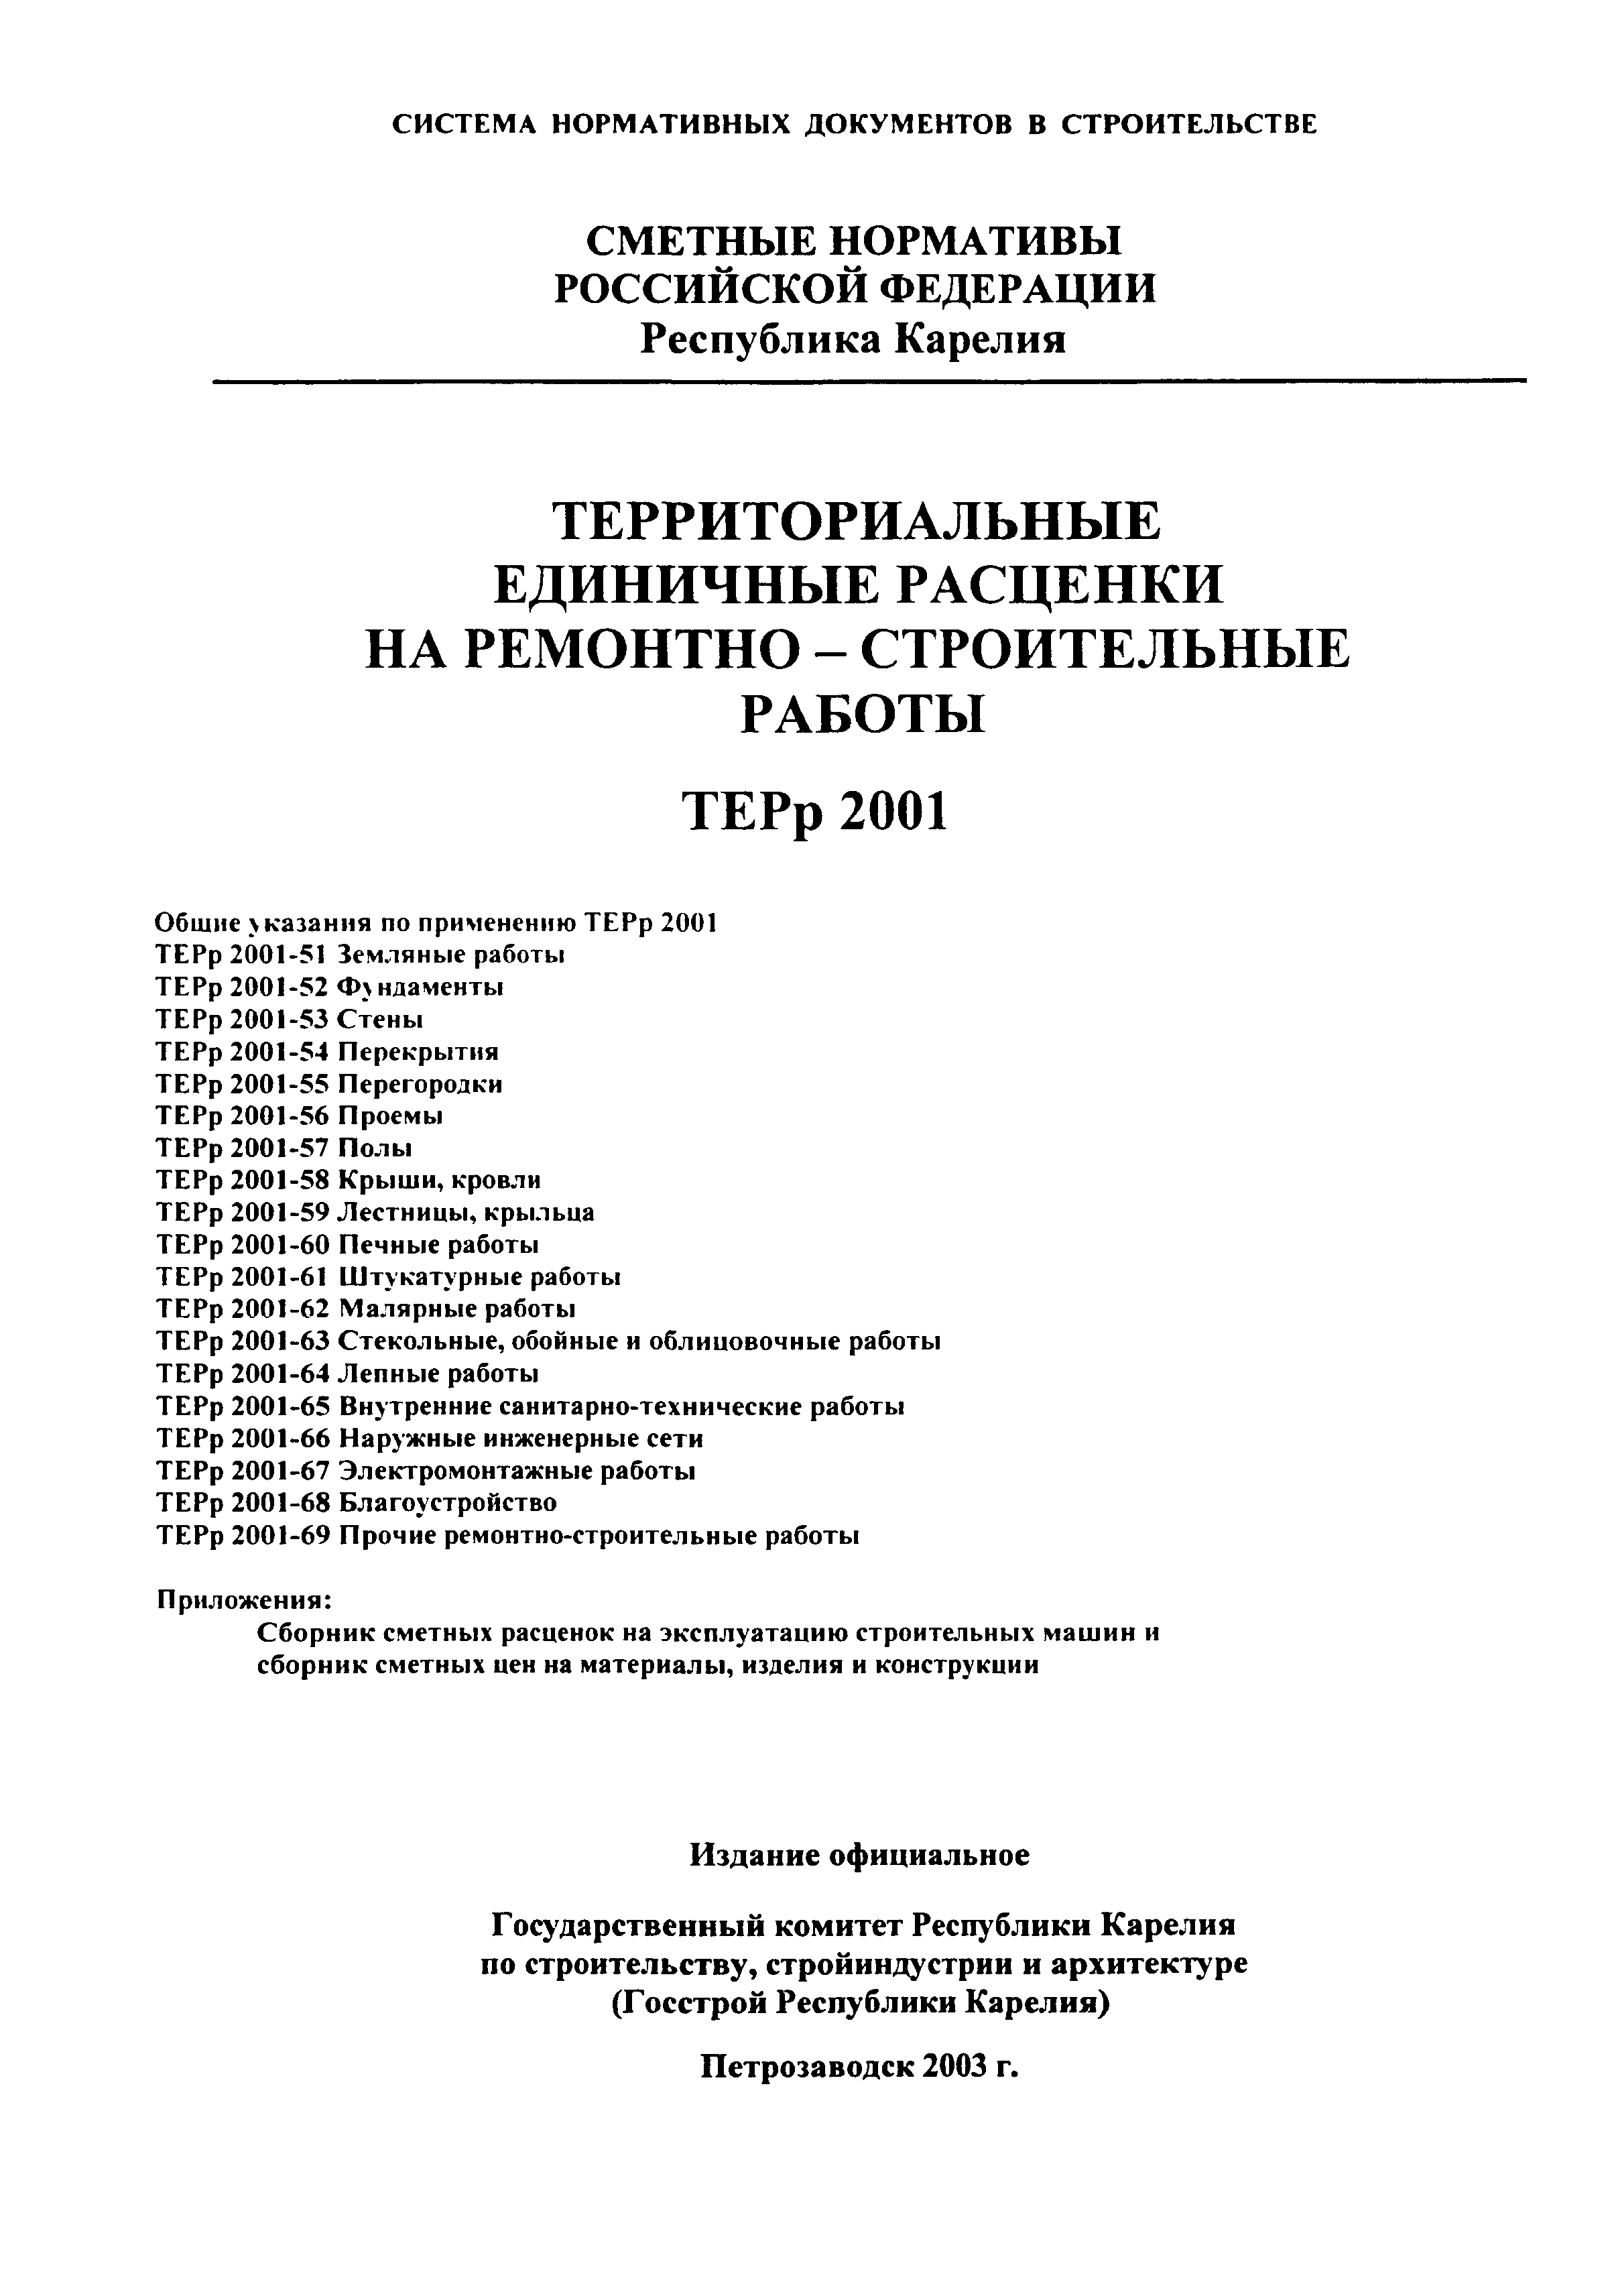 ТЕРр Республика Карелия 2001-66